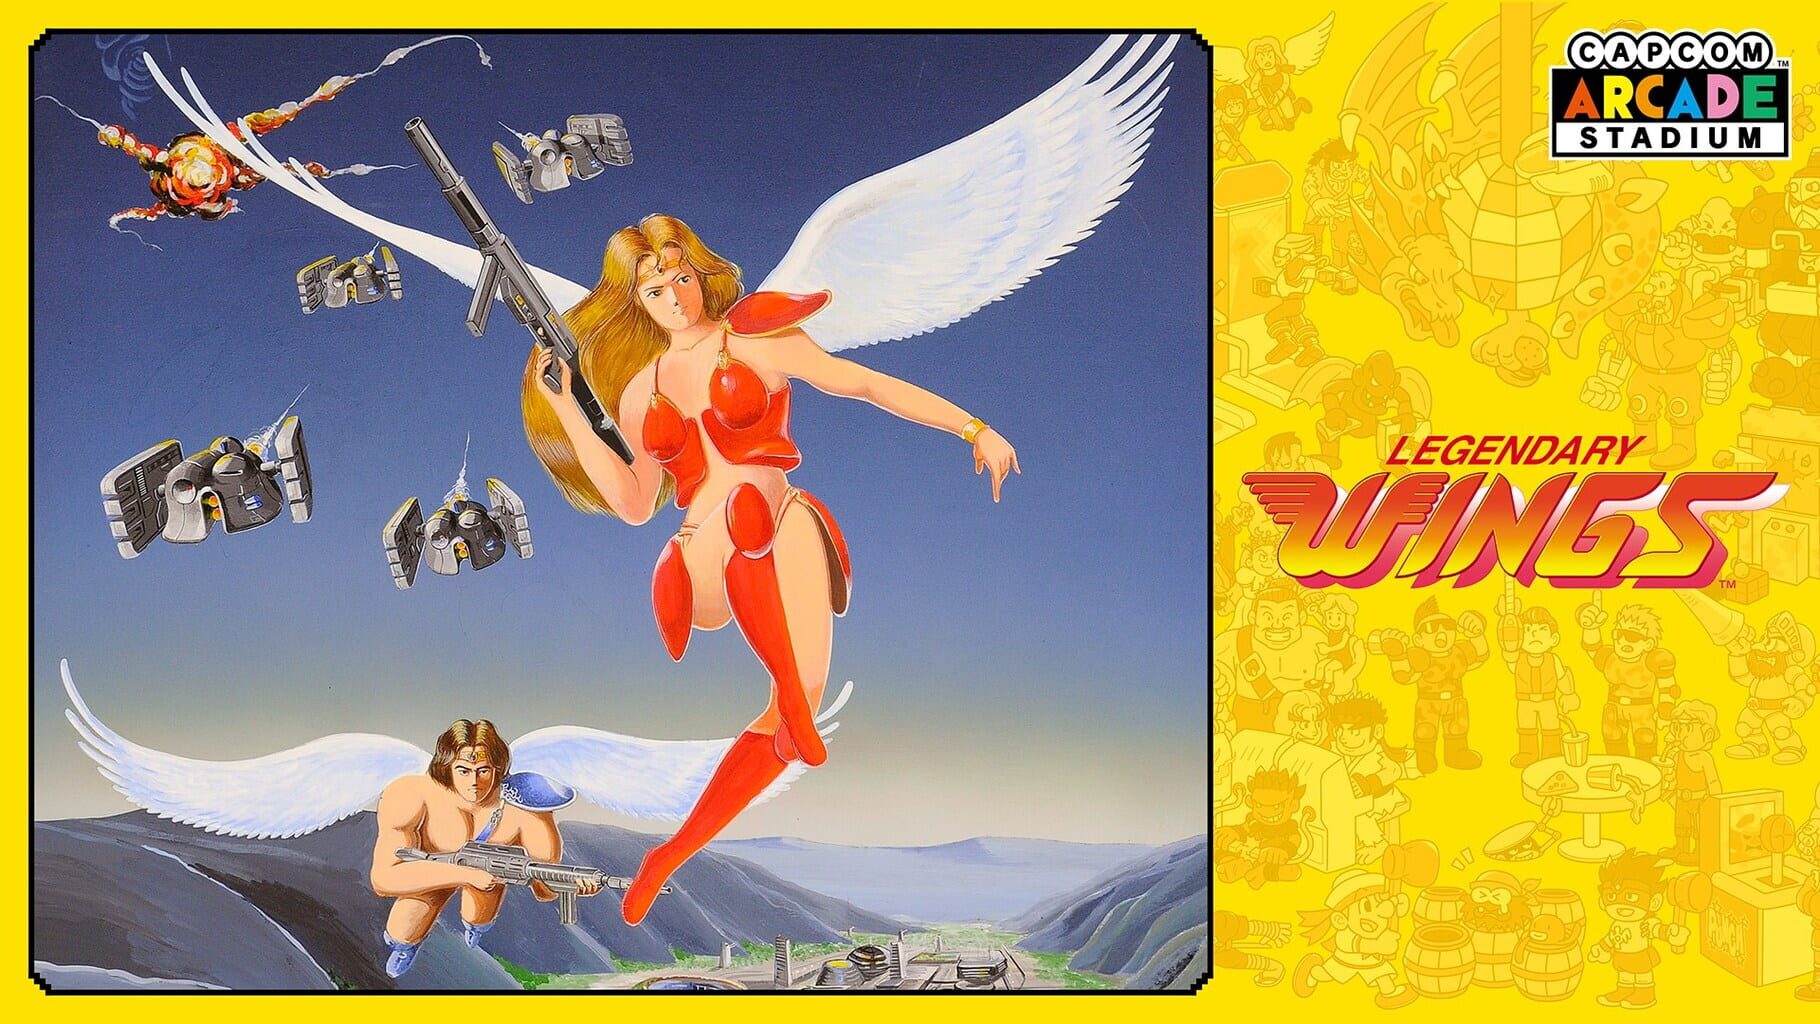 Capcom Arcade Stadium: Legendary Wings artwork